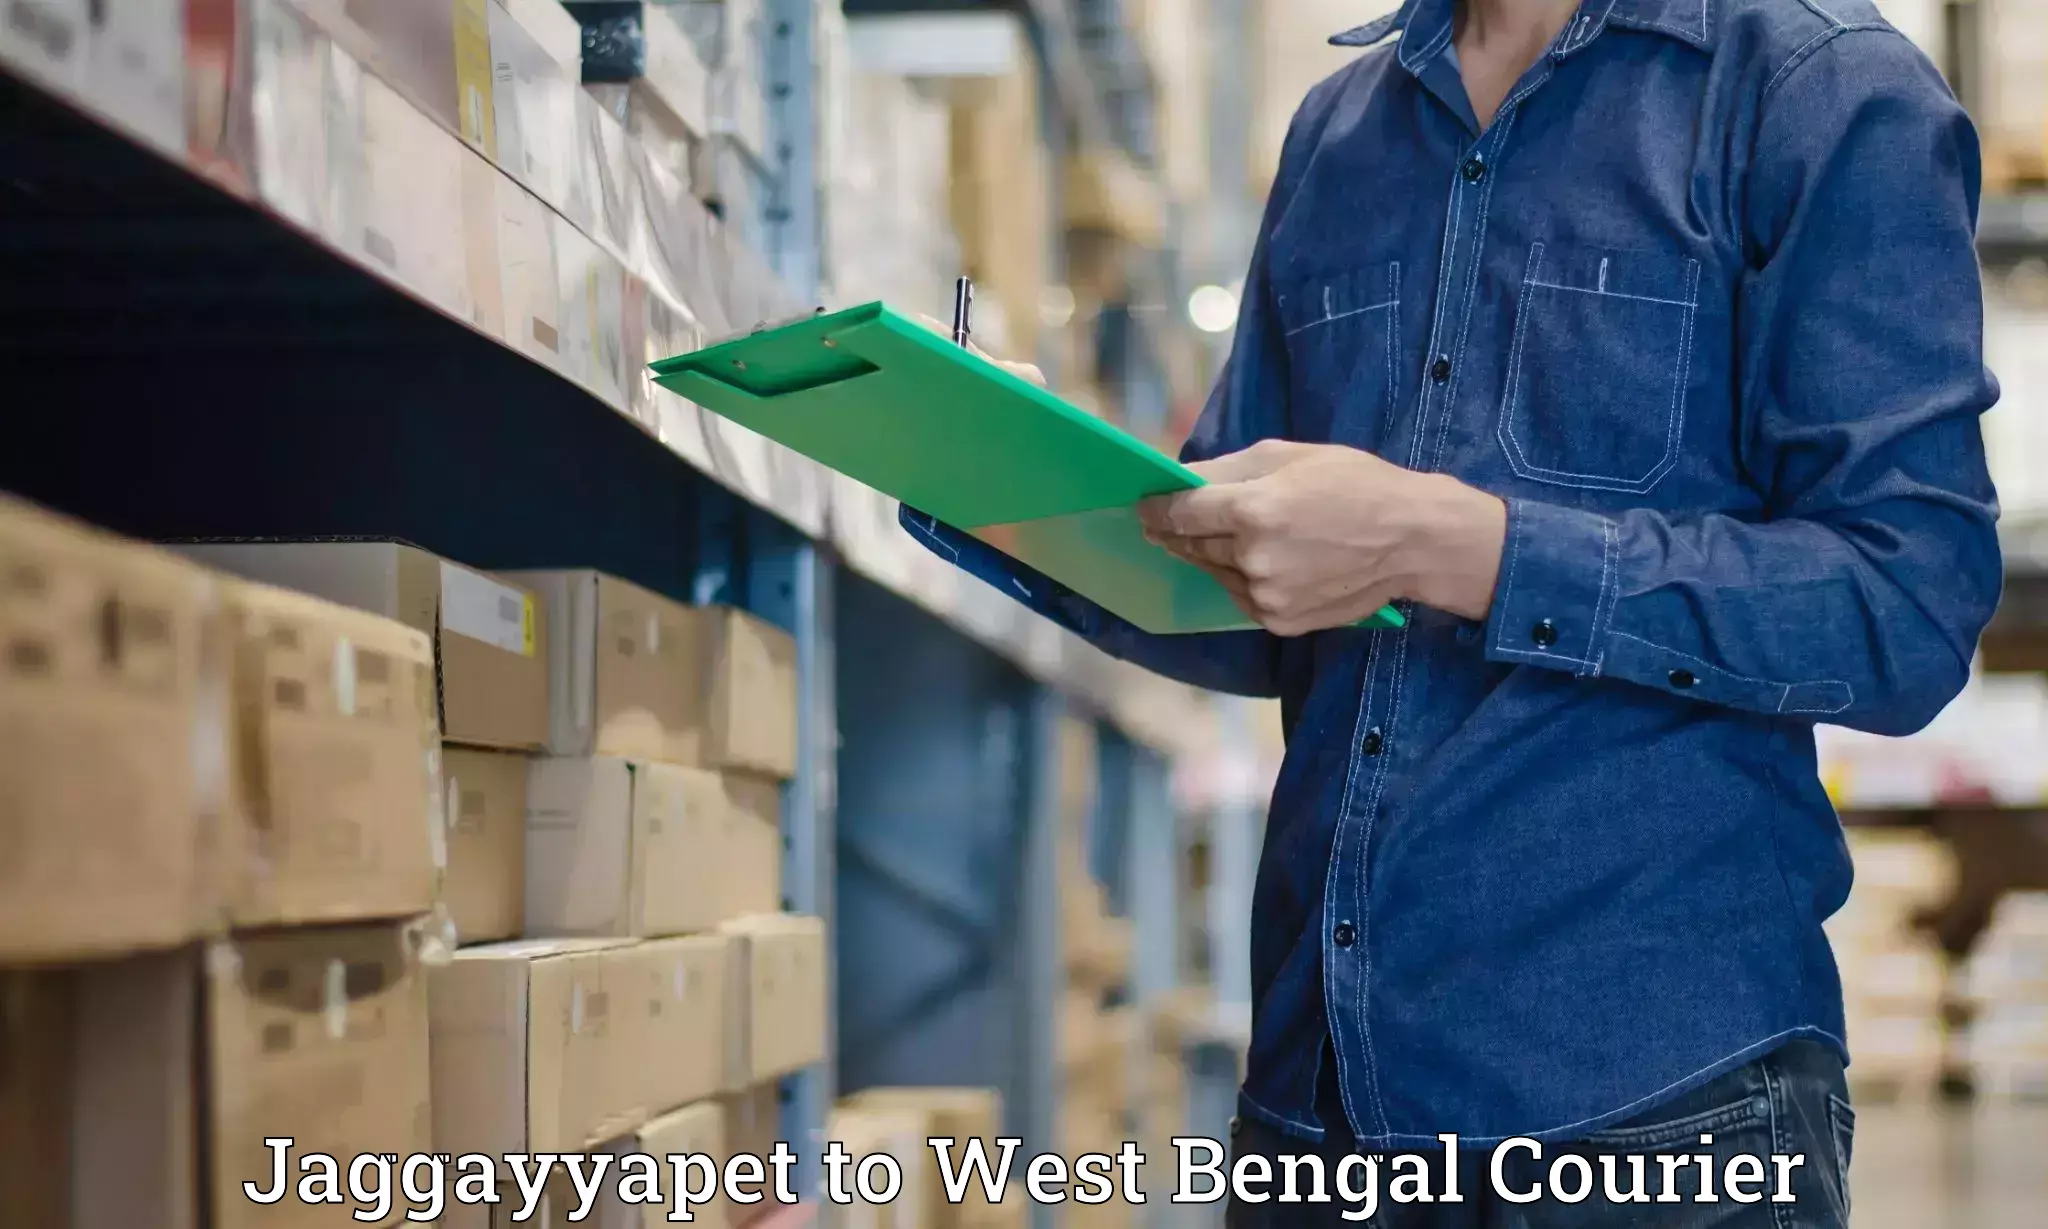 Global logistics network Jaggayyapet to West Bengal